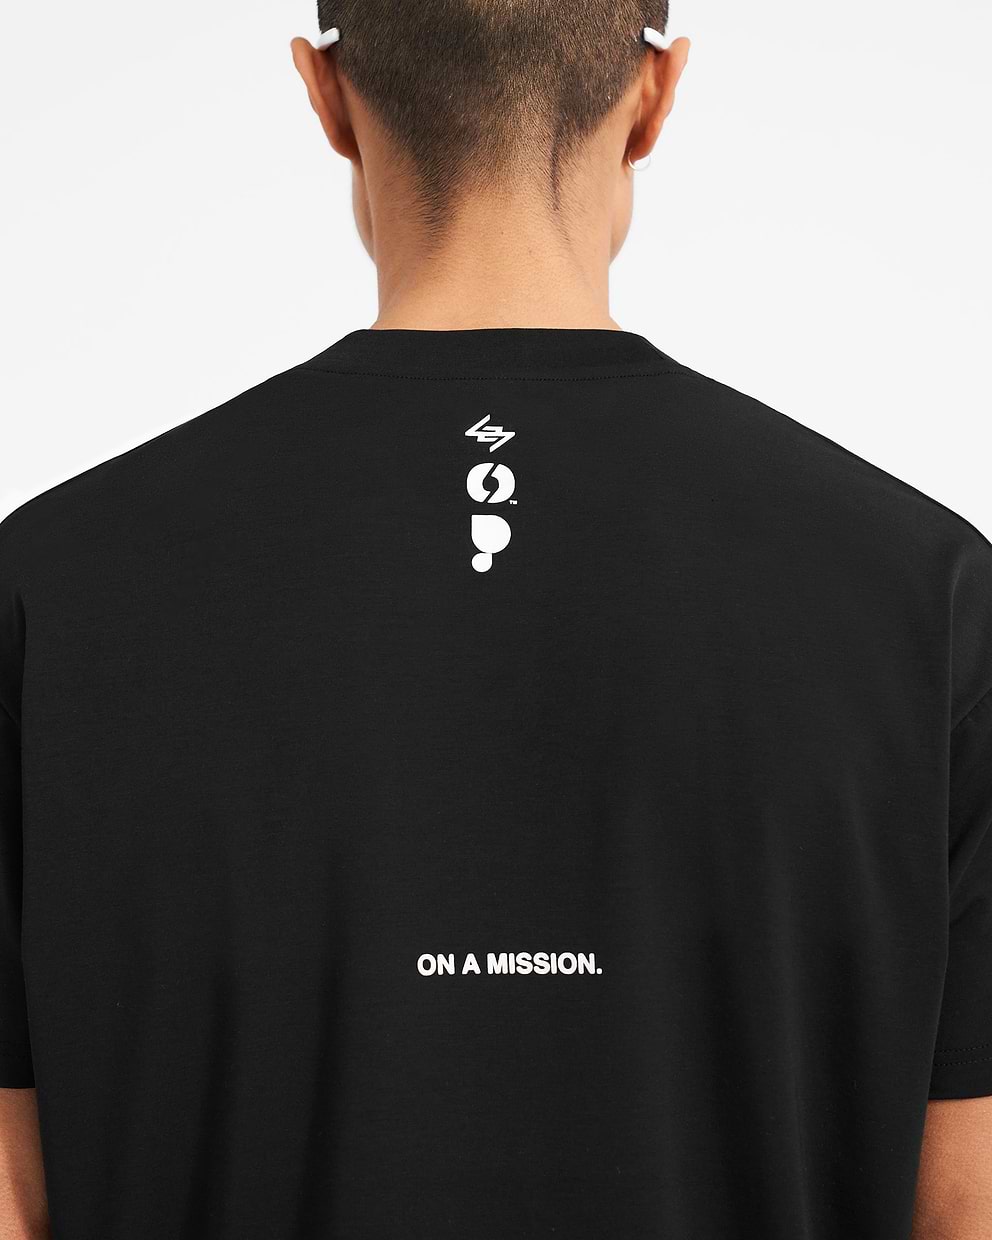 247 Marchon Puresport T-Shirt - Black